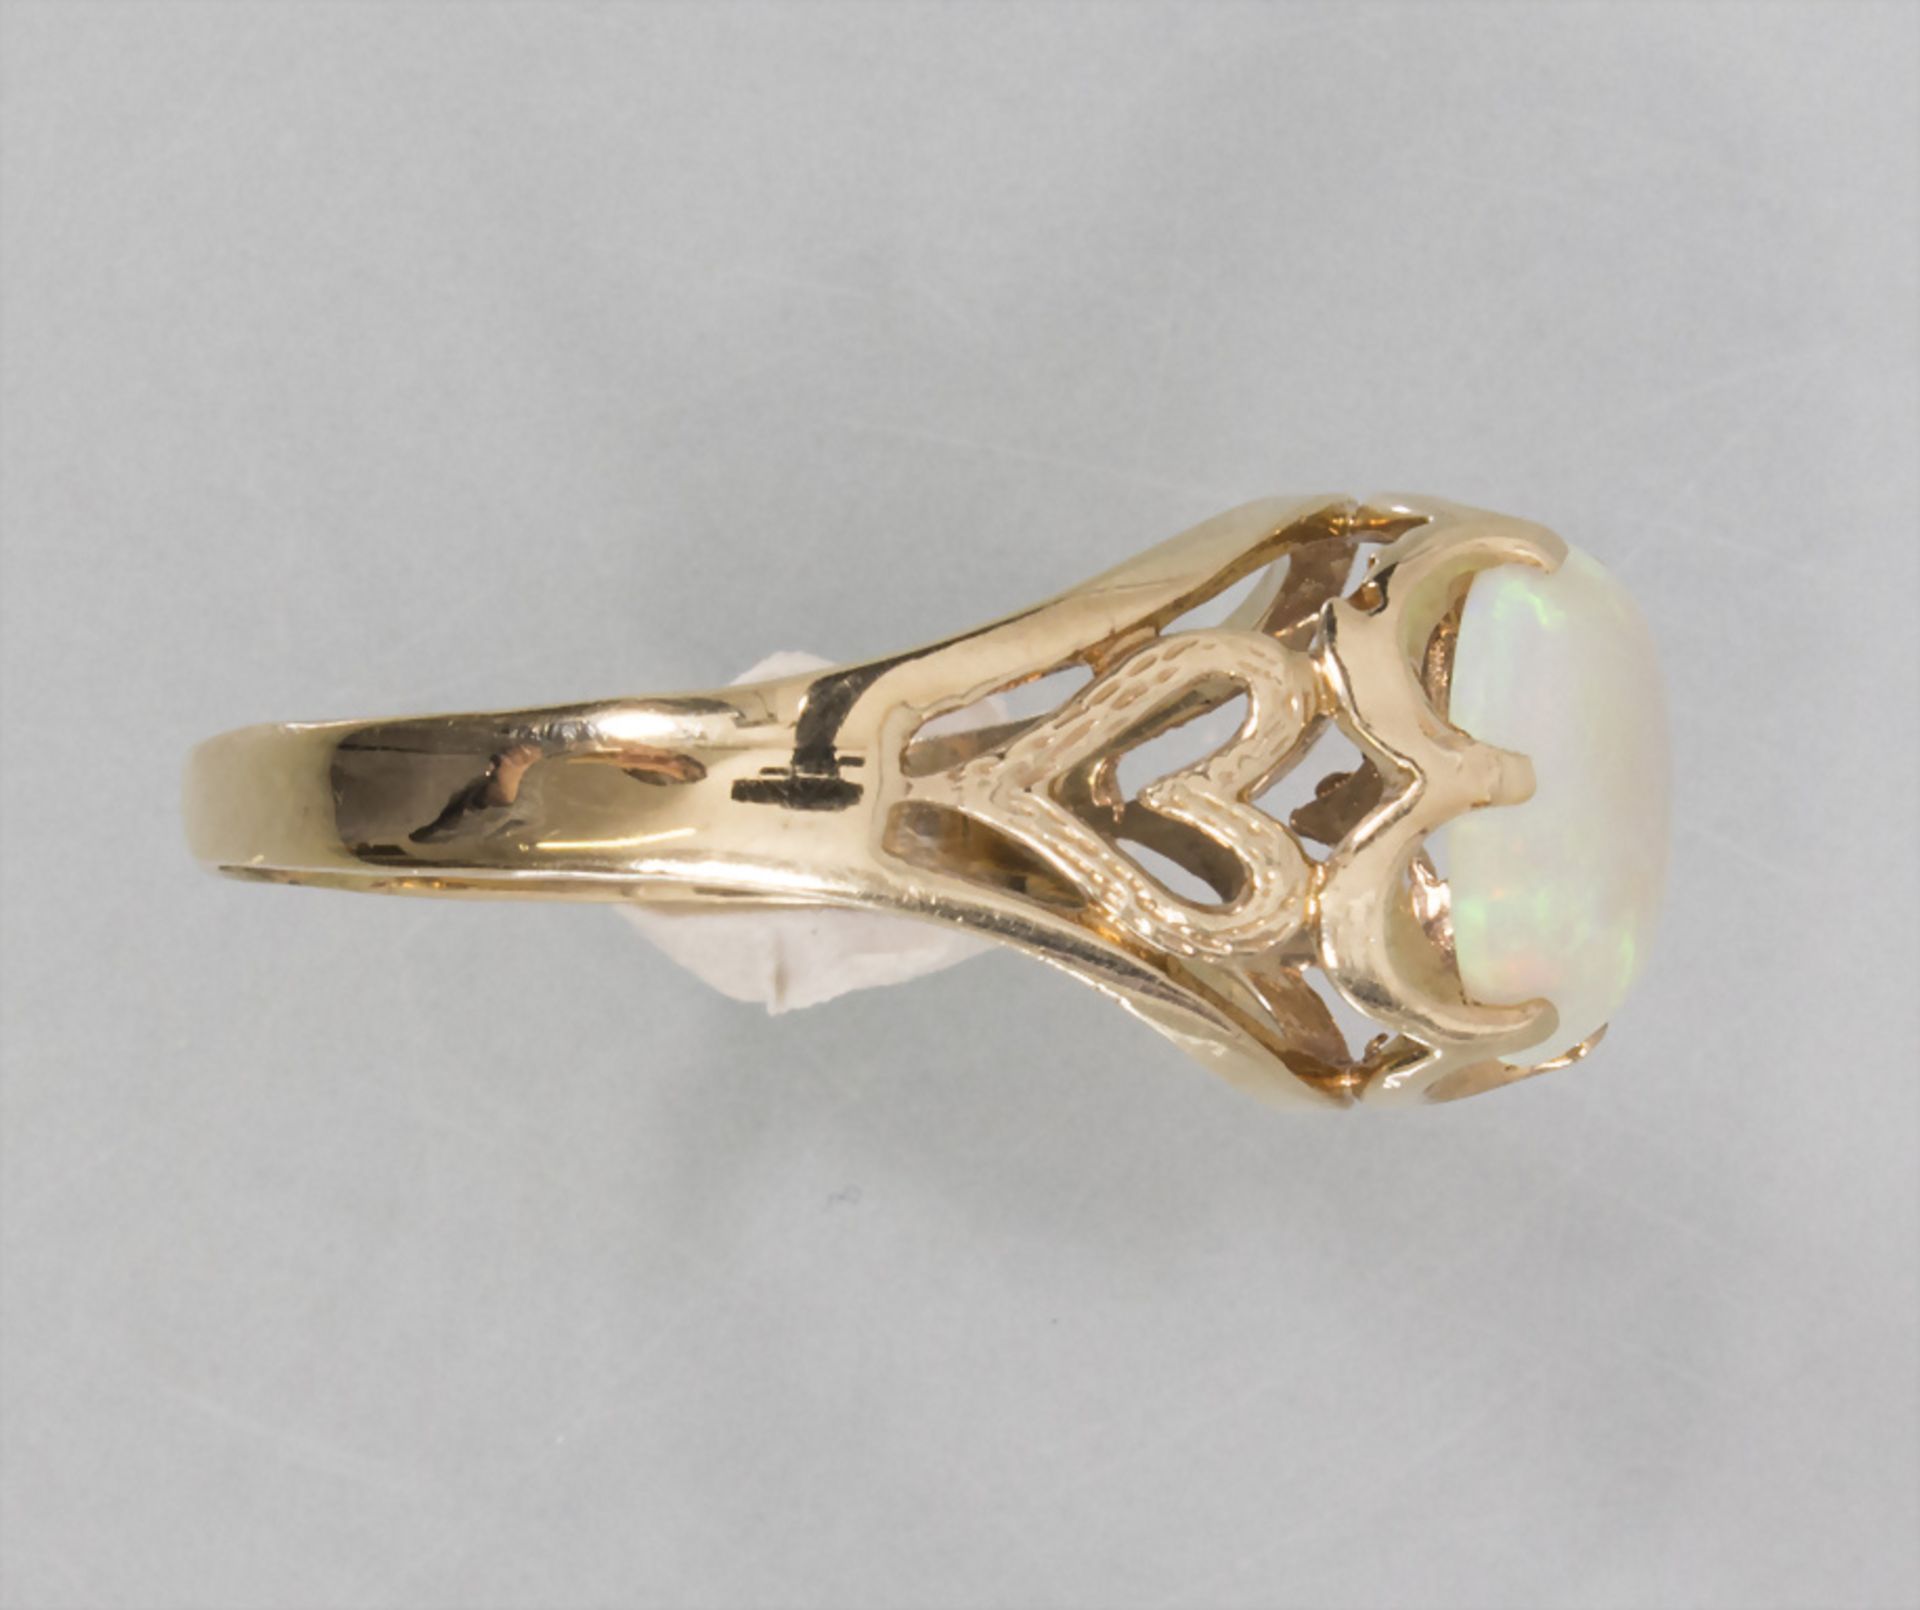 Damenring mit Opal / A ladies 14k gold ring with an opal - Bild 3 aus 4